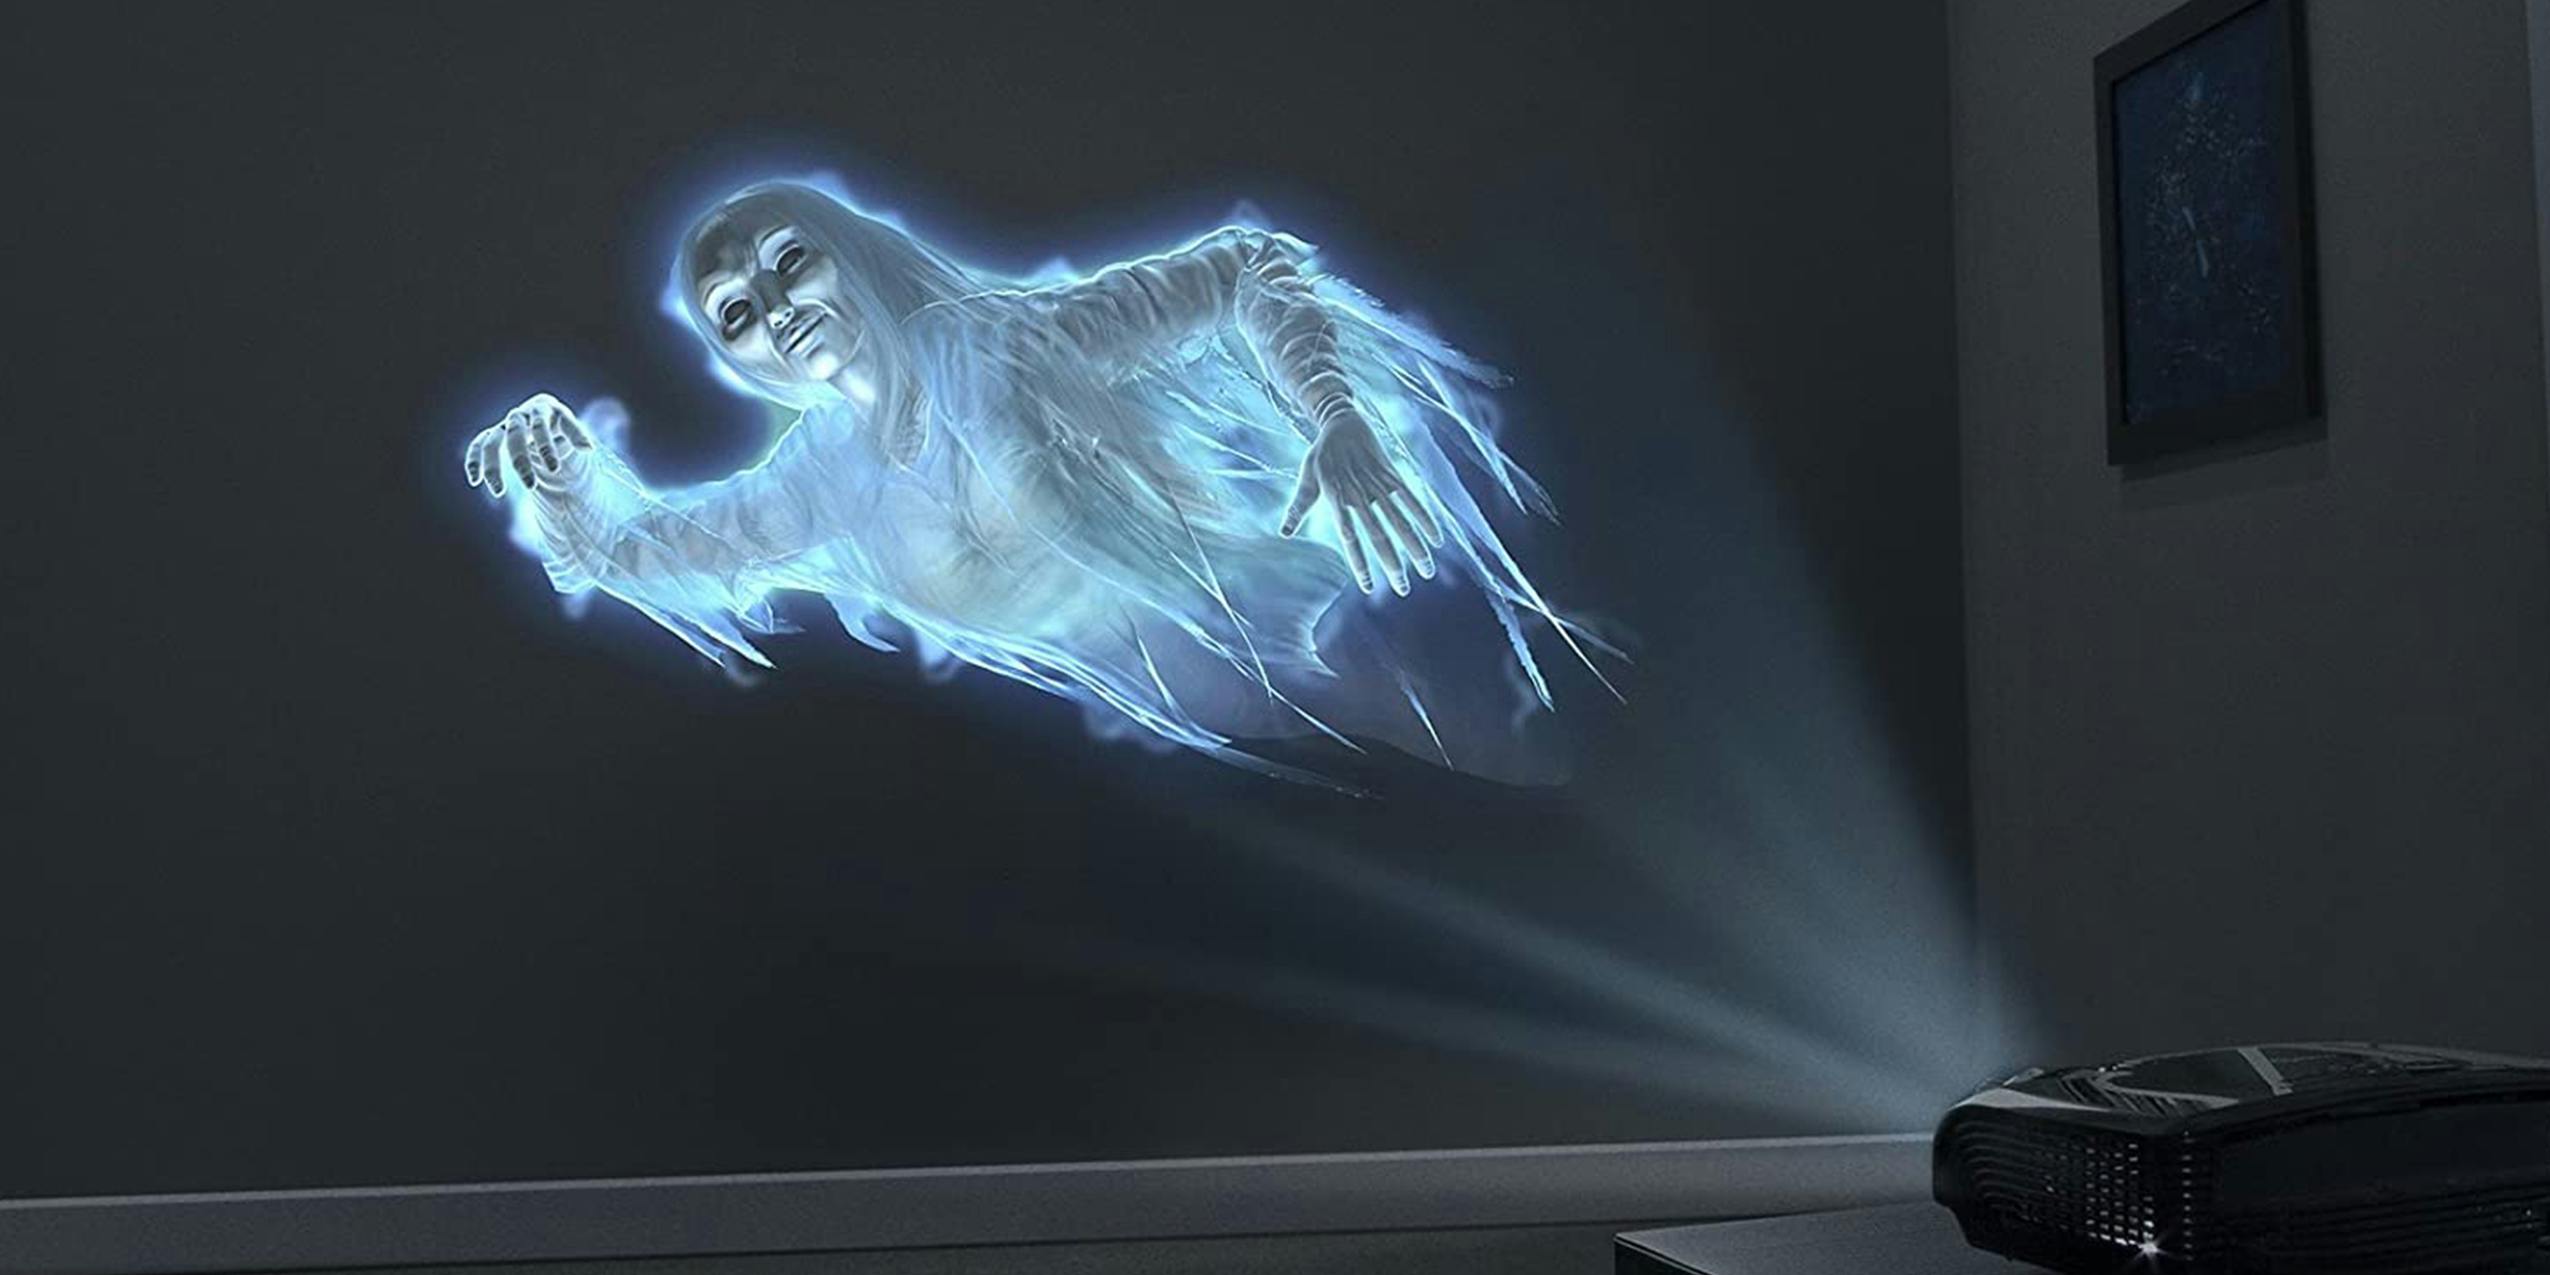 phantasm AtmosFX DVD projected onto white wall